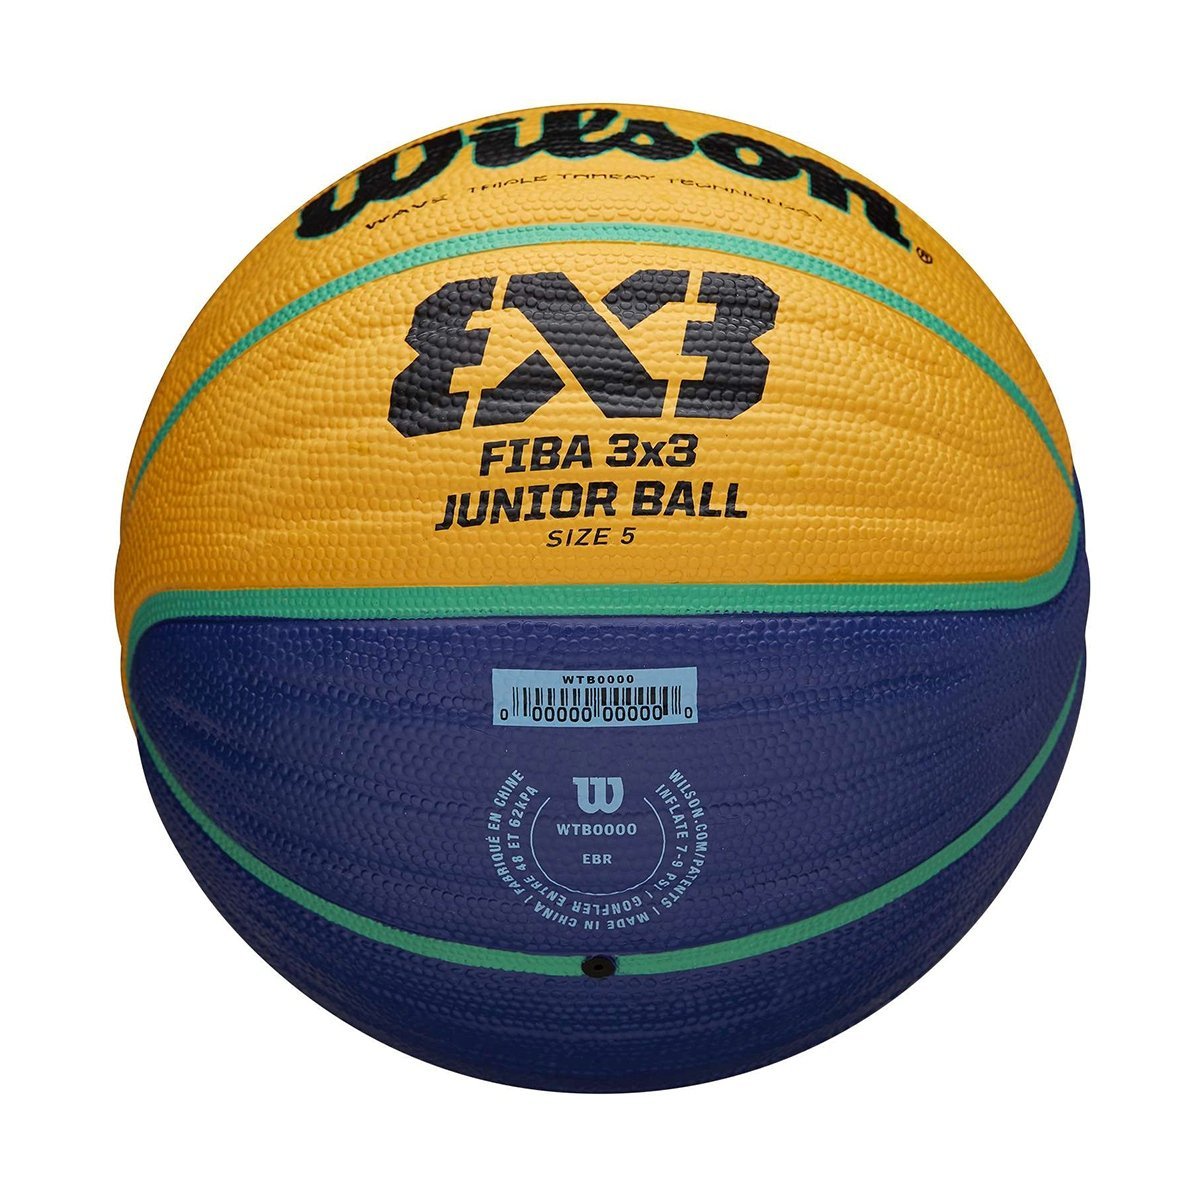 Lopta Wilson Fiba 3x3 Basketbal J - žltá/modrá